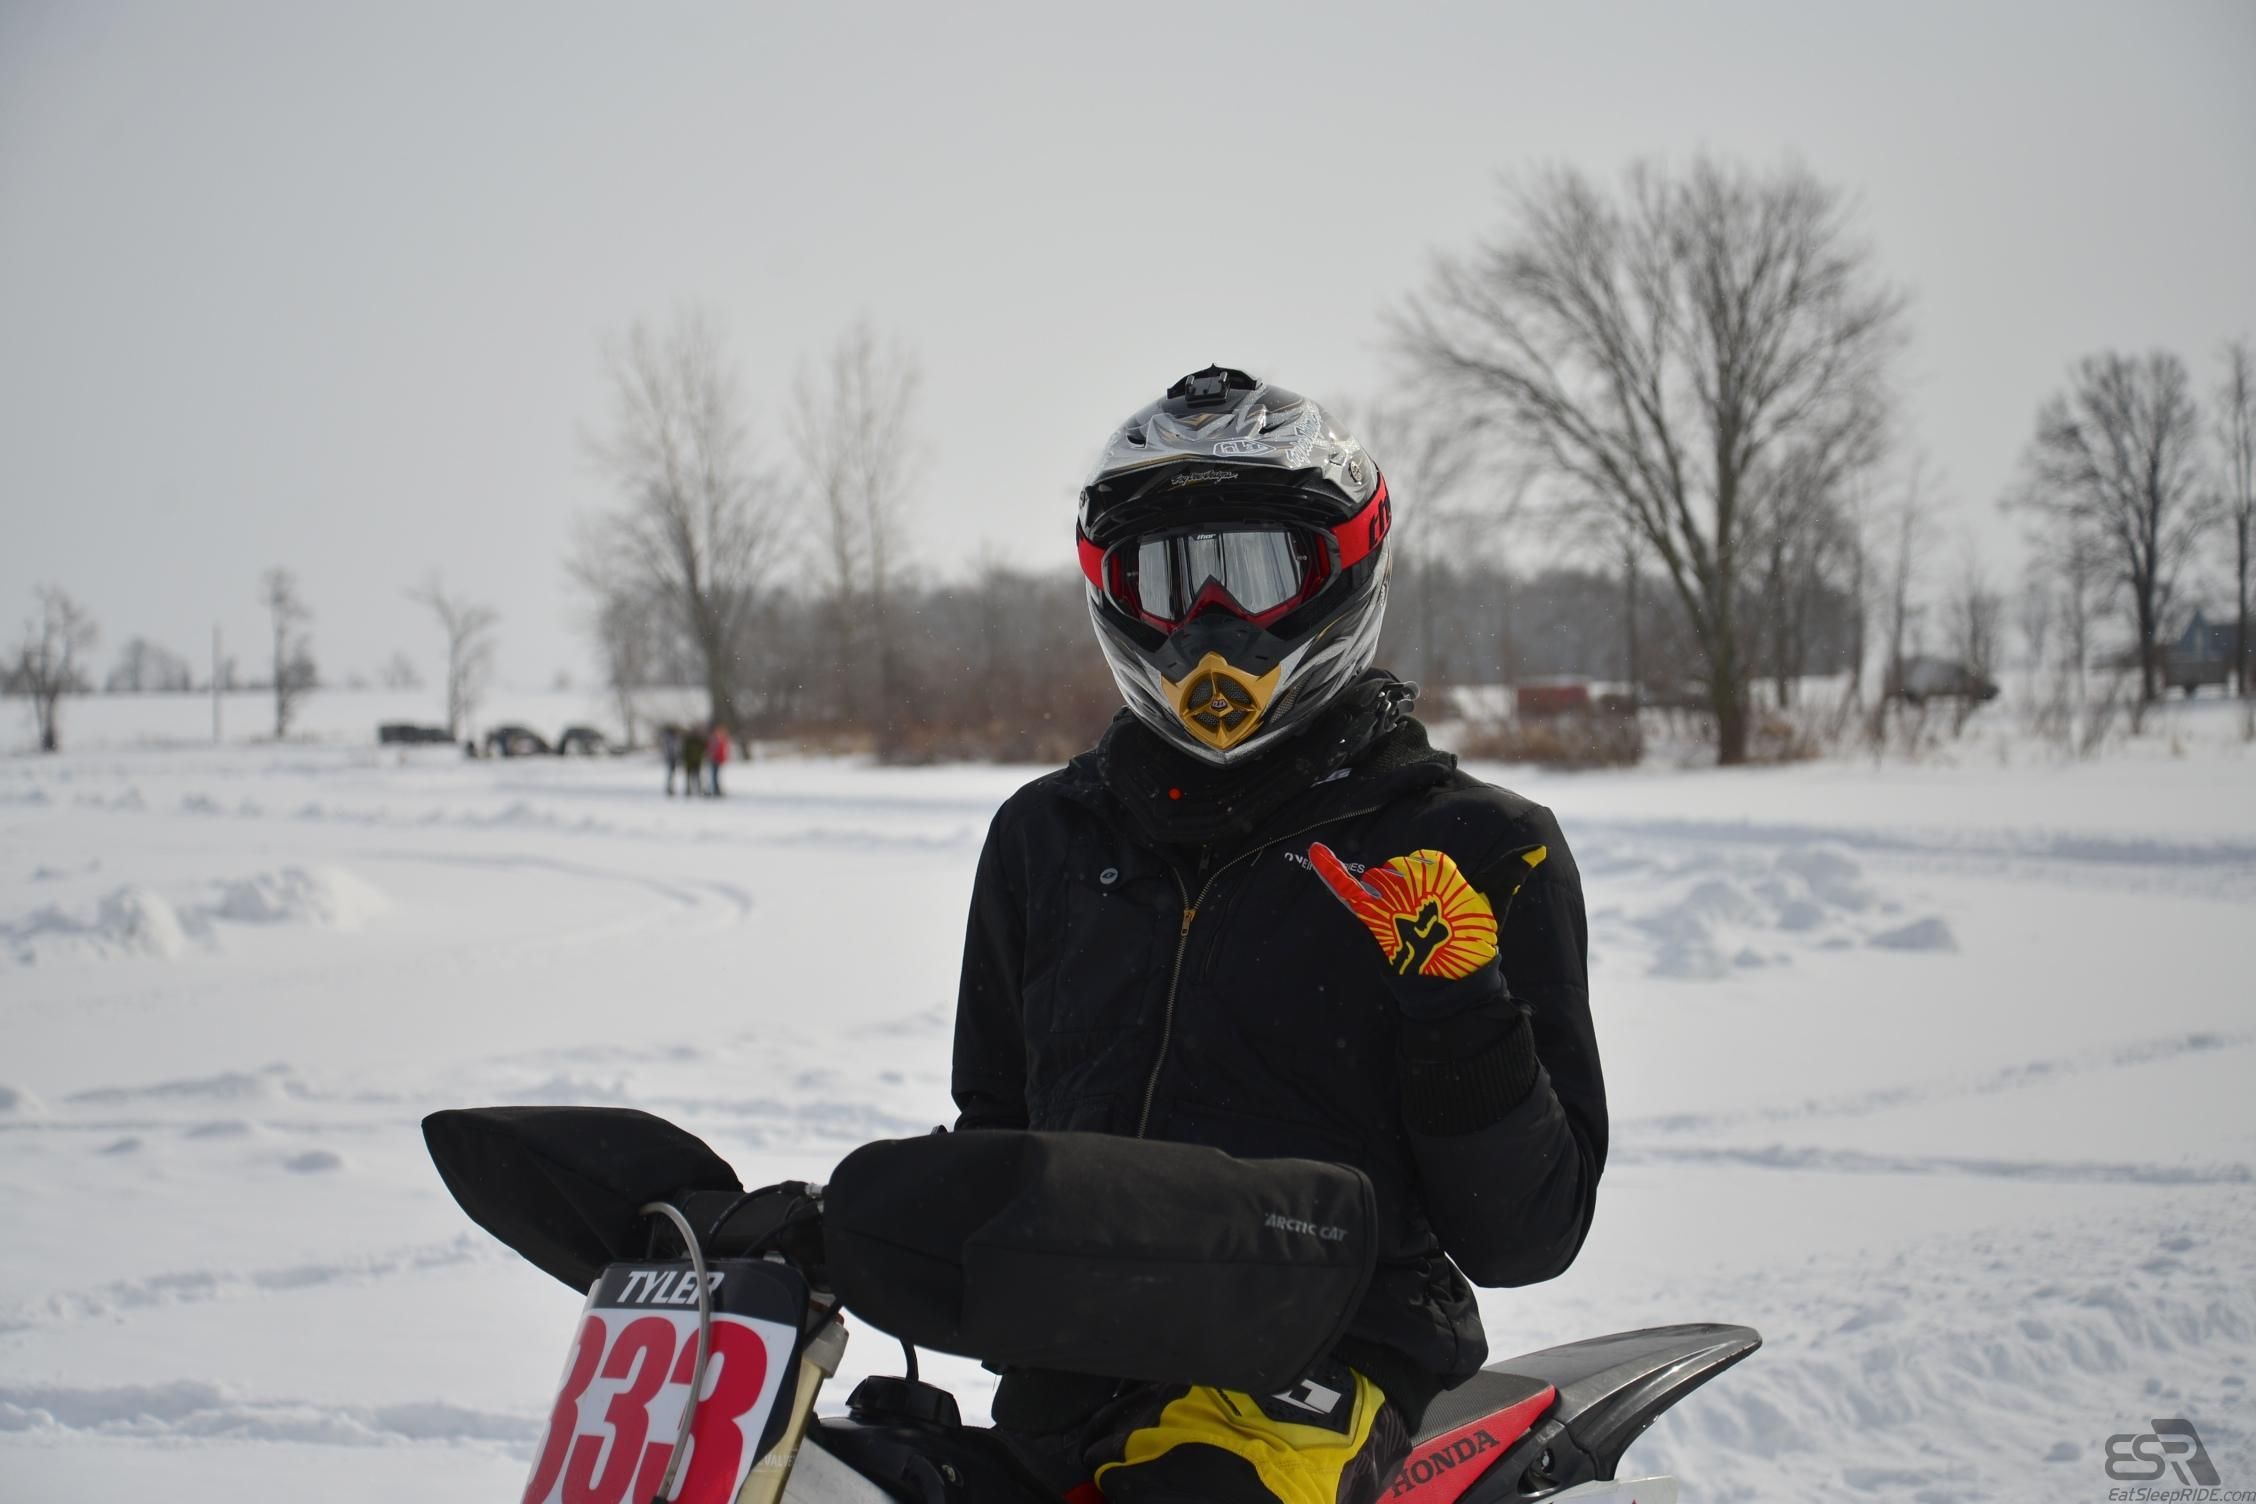 #333 Tyler - Ice riding